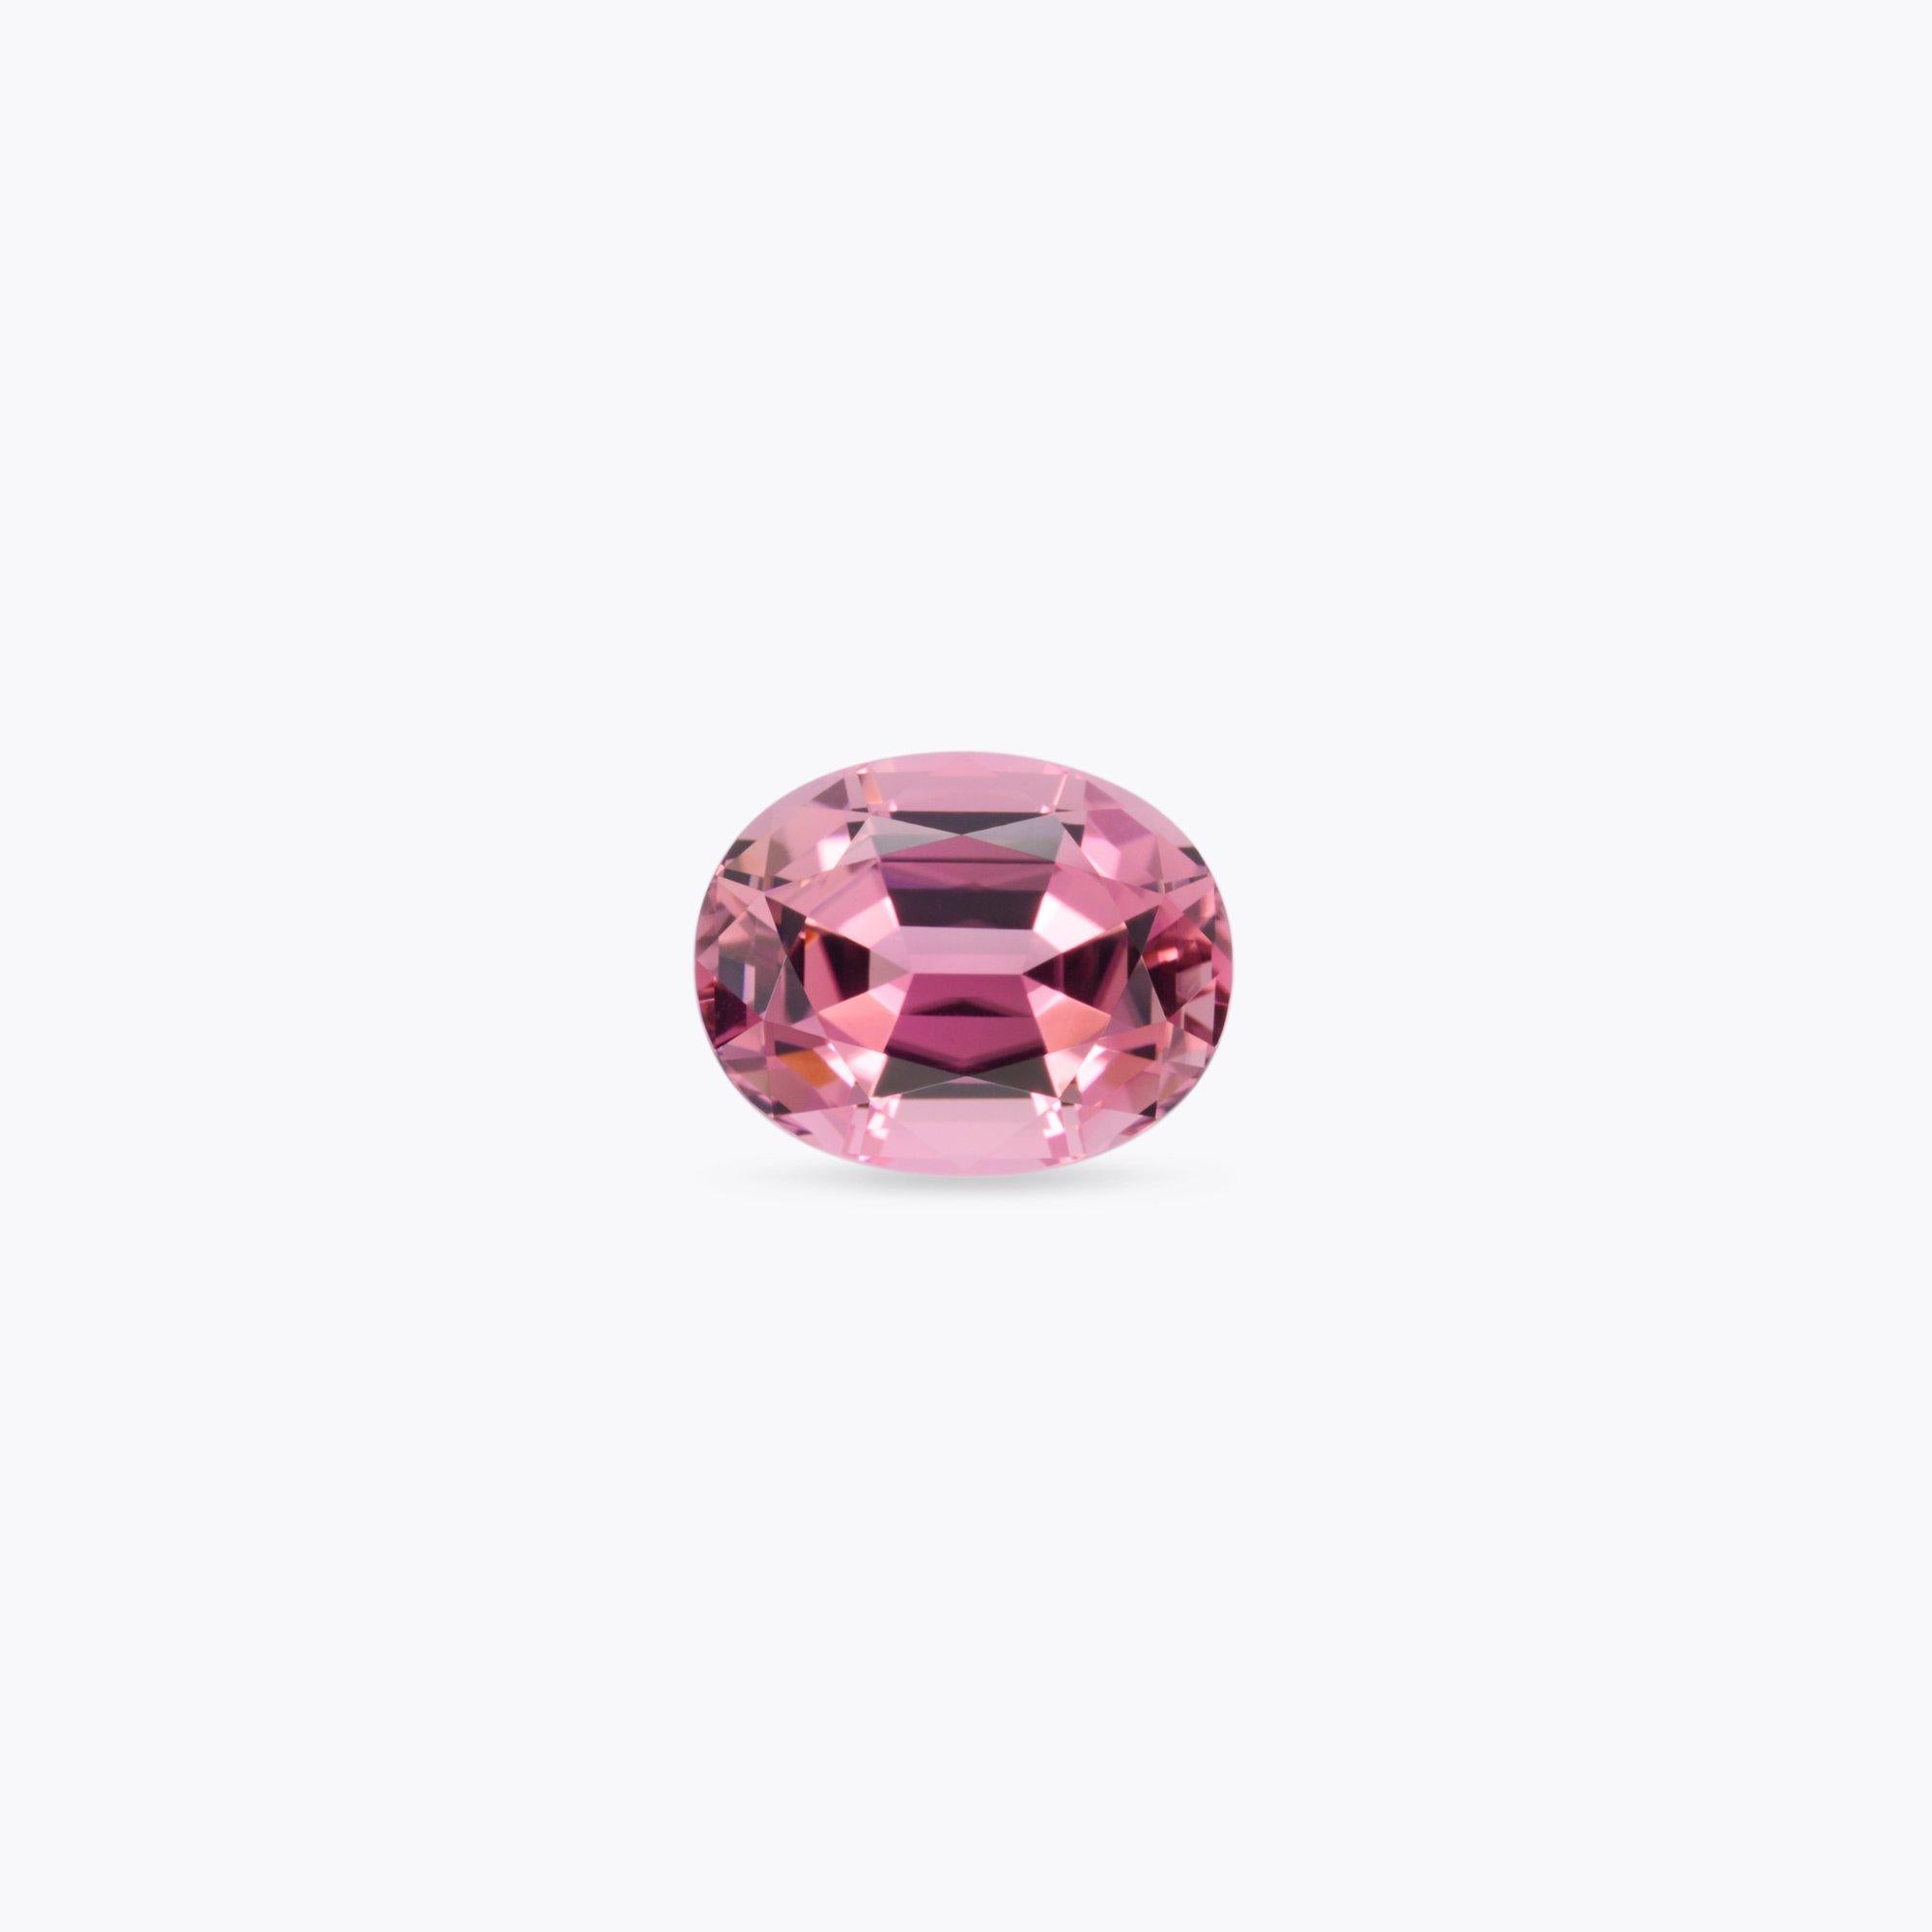 Contemporary Pink Tourmaline Ring Gem 6.95 Carat 